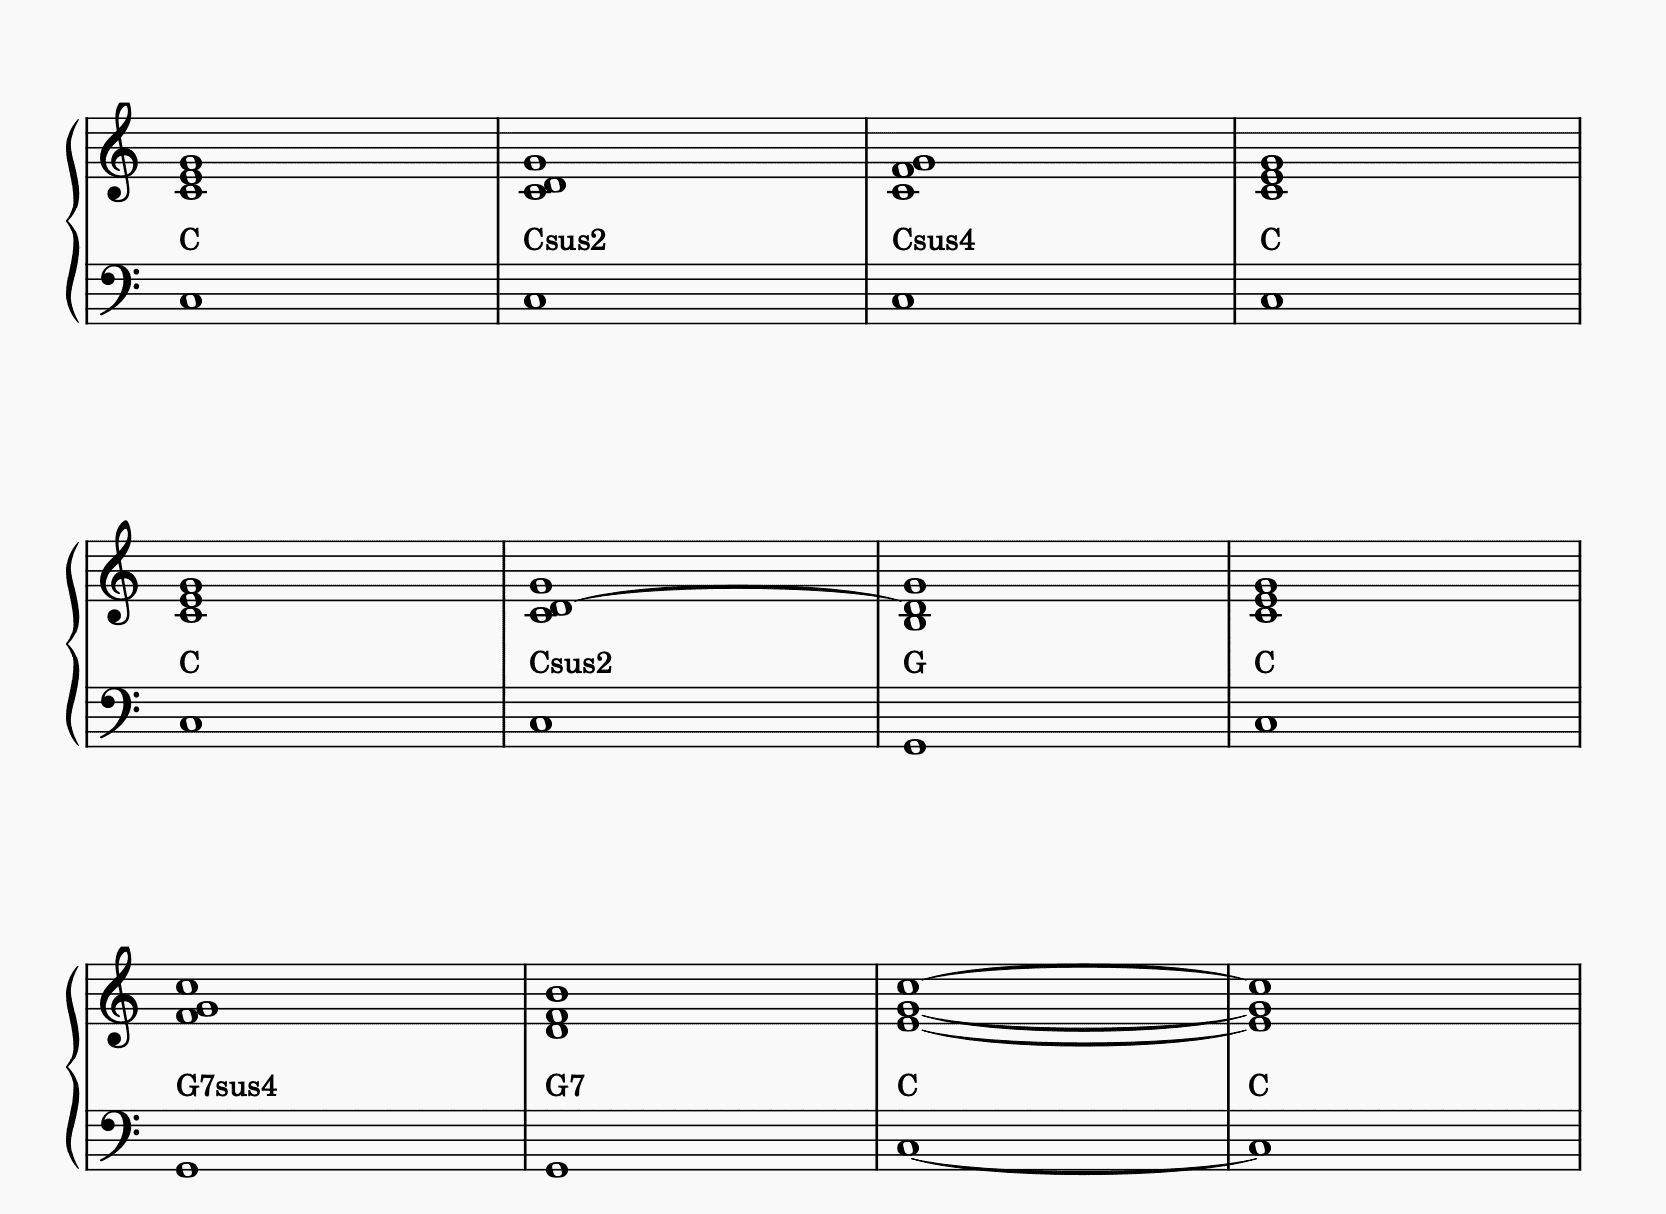 O acorde Suspenso (Sus2, Sus4) – ACORDES E GUITARRAS